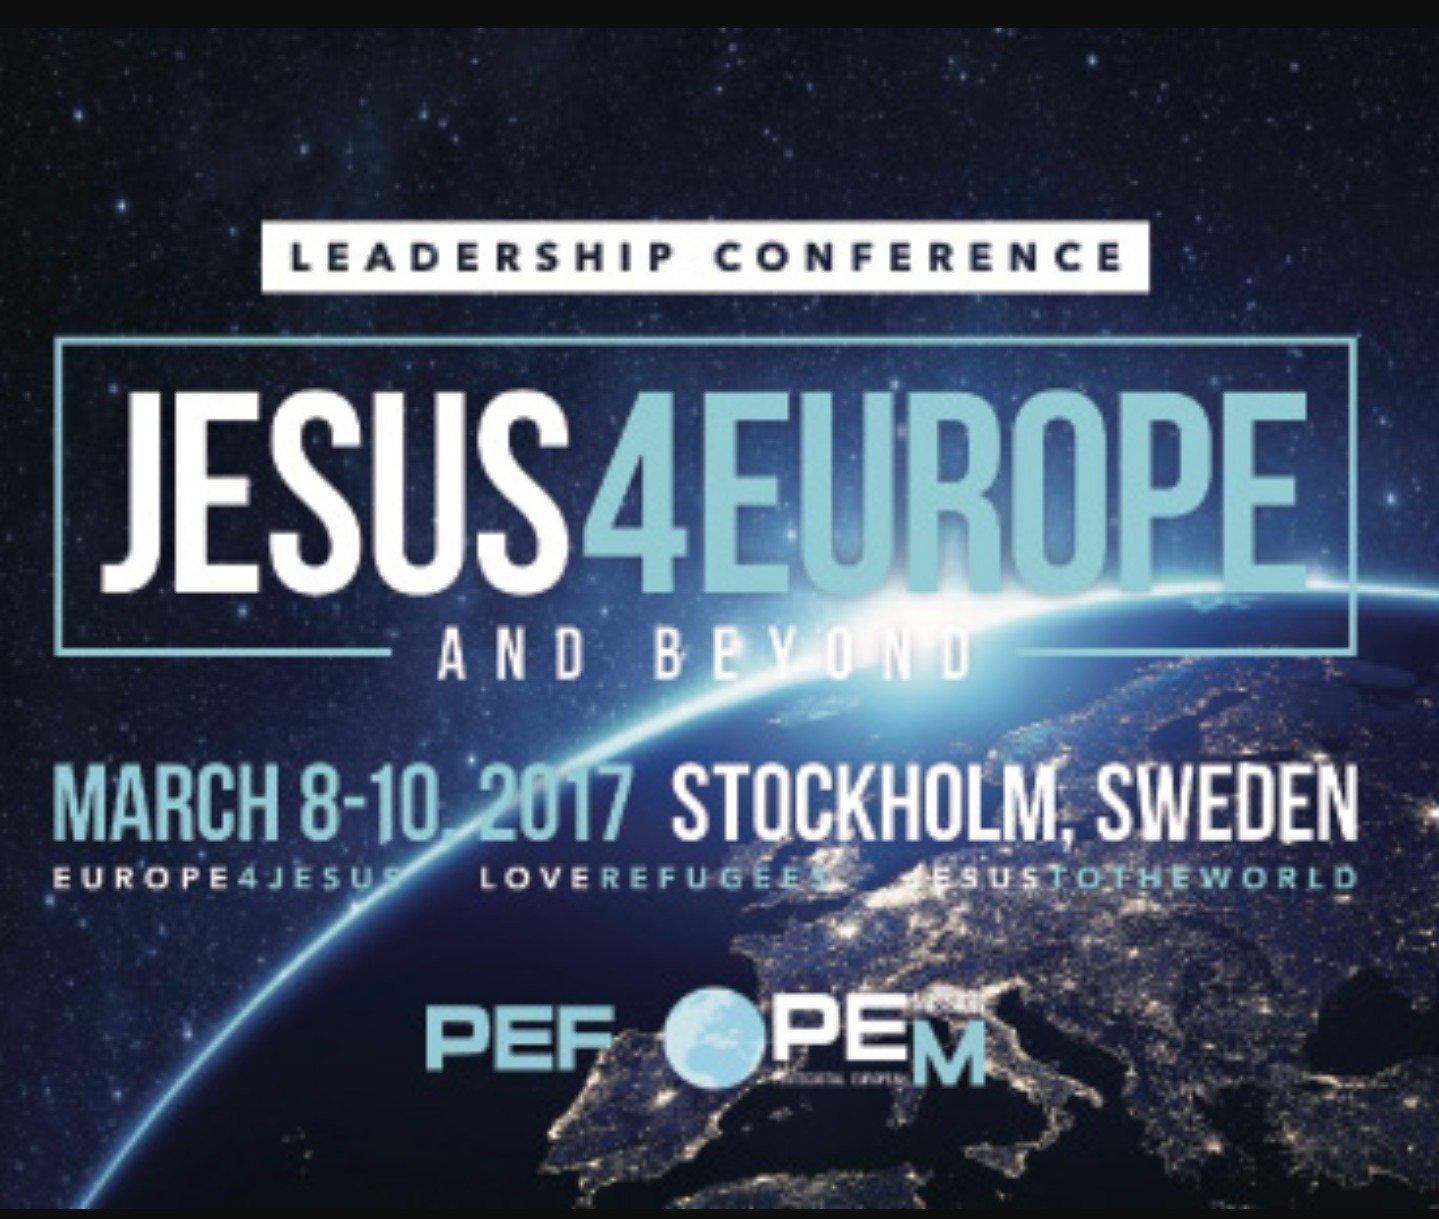 Pentecostal European Fellowship - creating fellowship, sharing the gospel, casting the vision #PEFfamily #PEM #Jesus4Europe